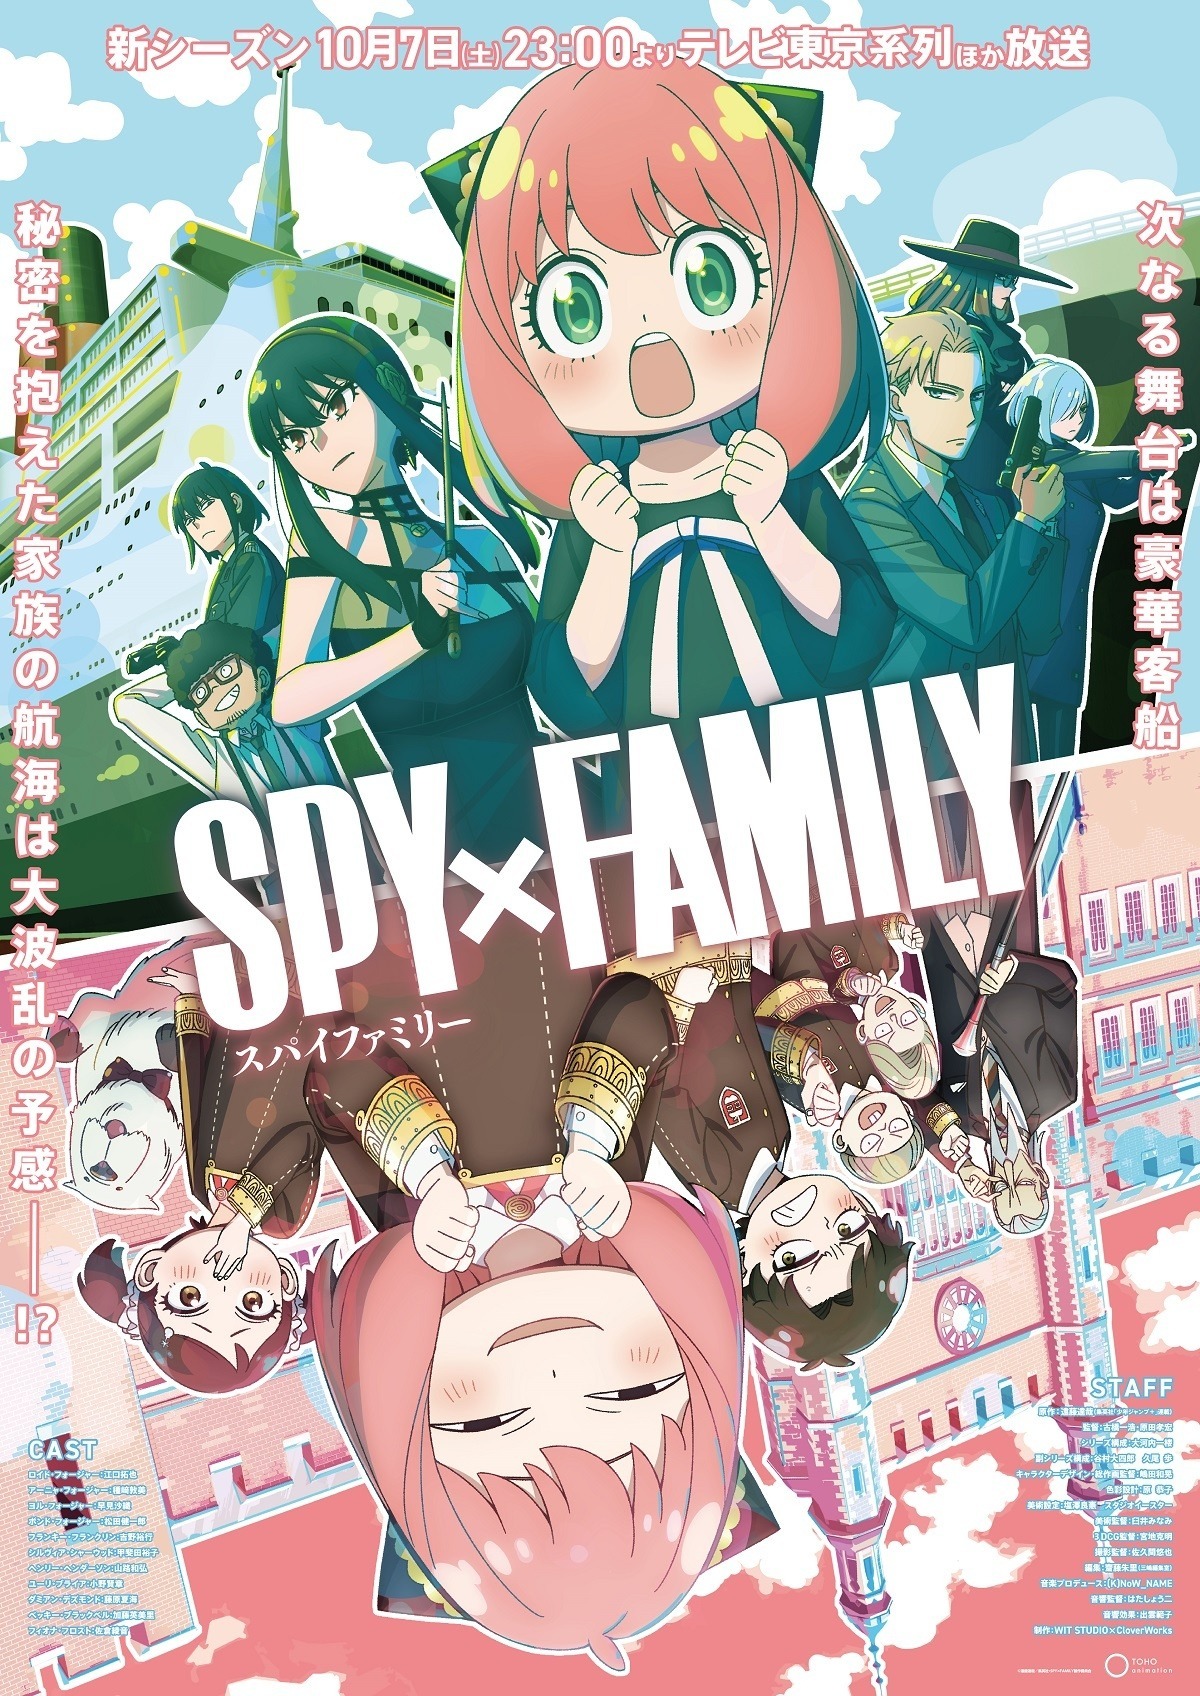 SPY x FAMILY Anime Kicks off Season 2 with Celebratory Artwork